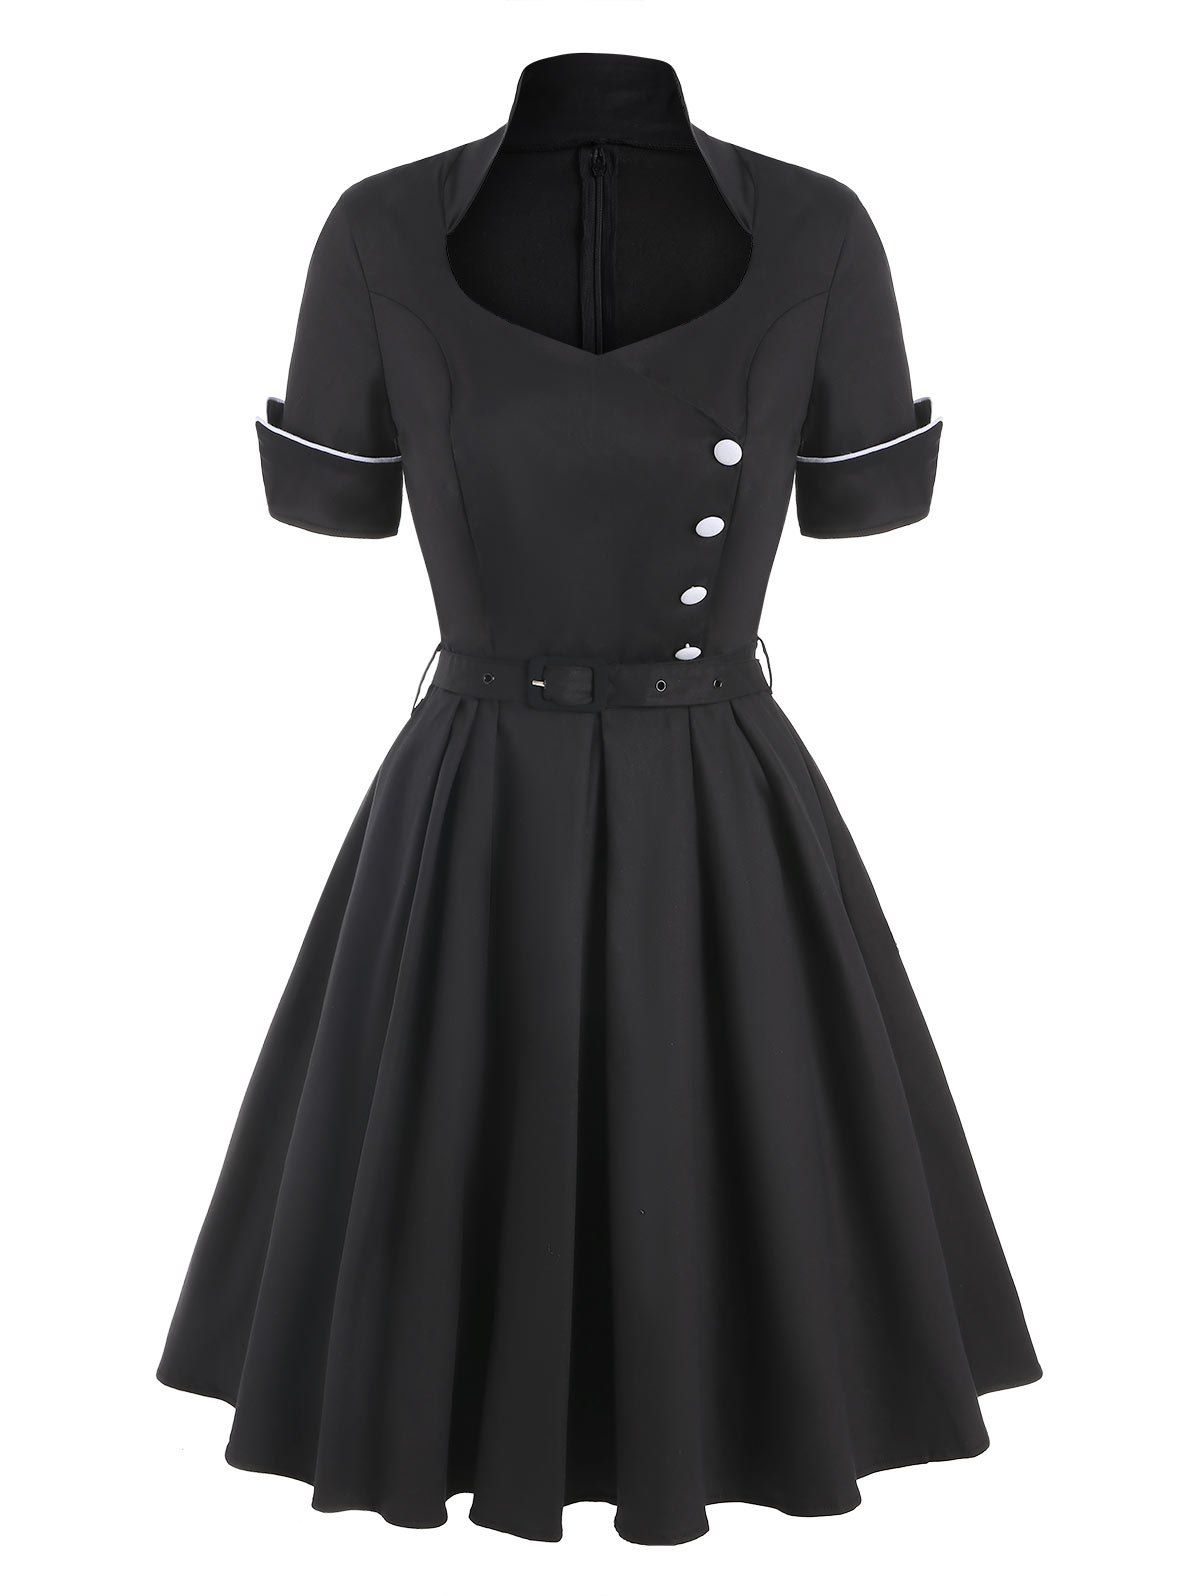 Vintage Contrast Buttons Pin Up Dress - BLACK XL